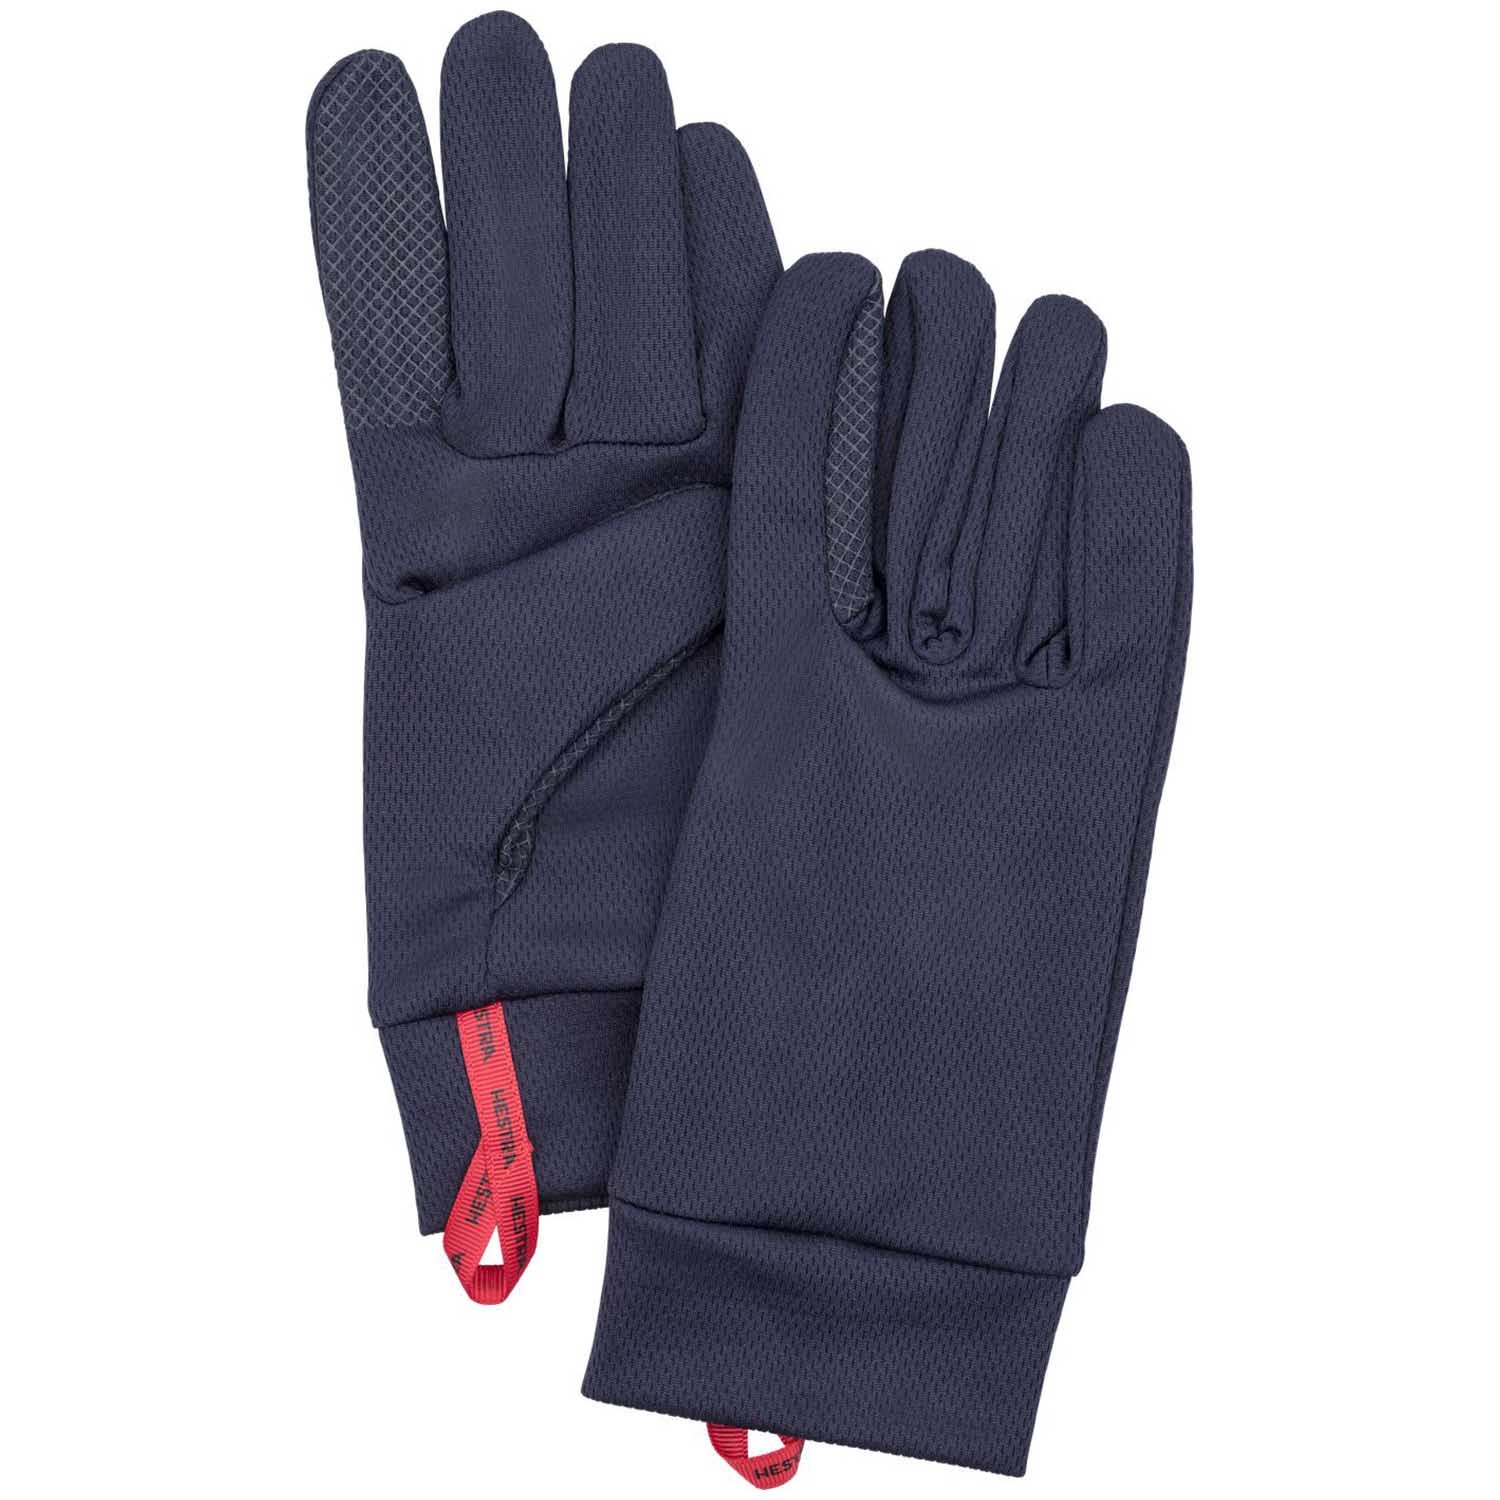 2021 Adult Hestra Grey Merino Touch Point Liner size 6 glove 34440 Winter Warm 